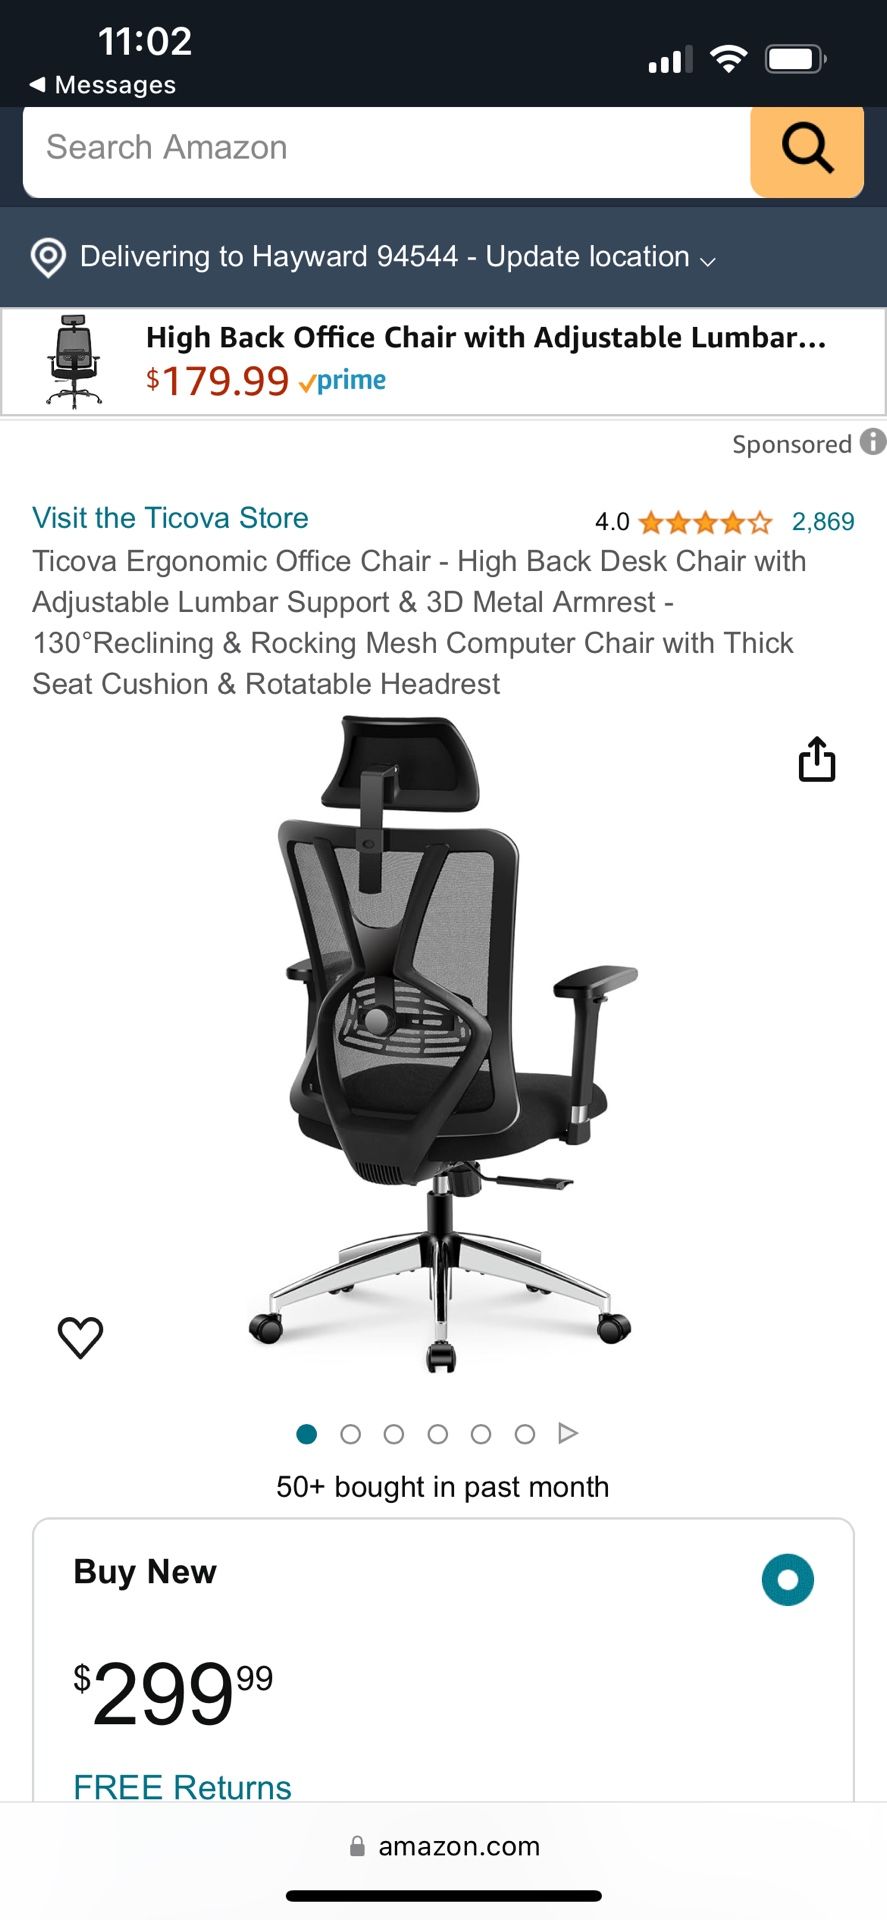 Ticova Ergonomic Chair